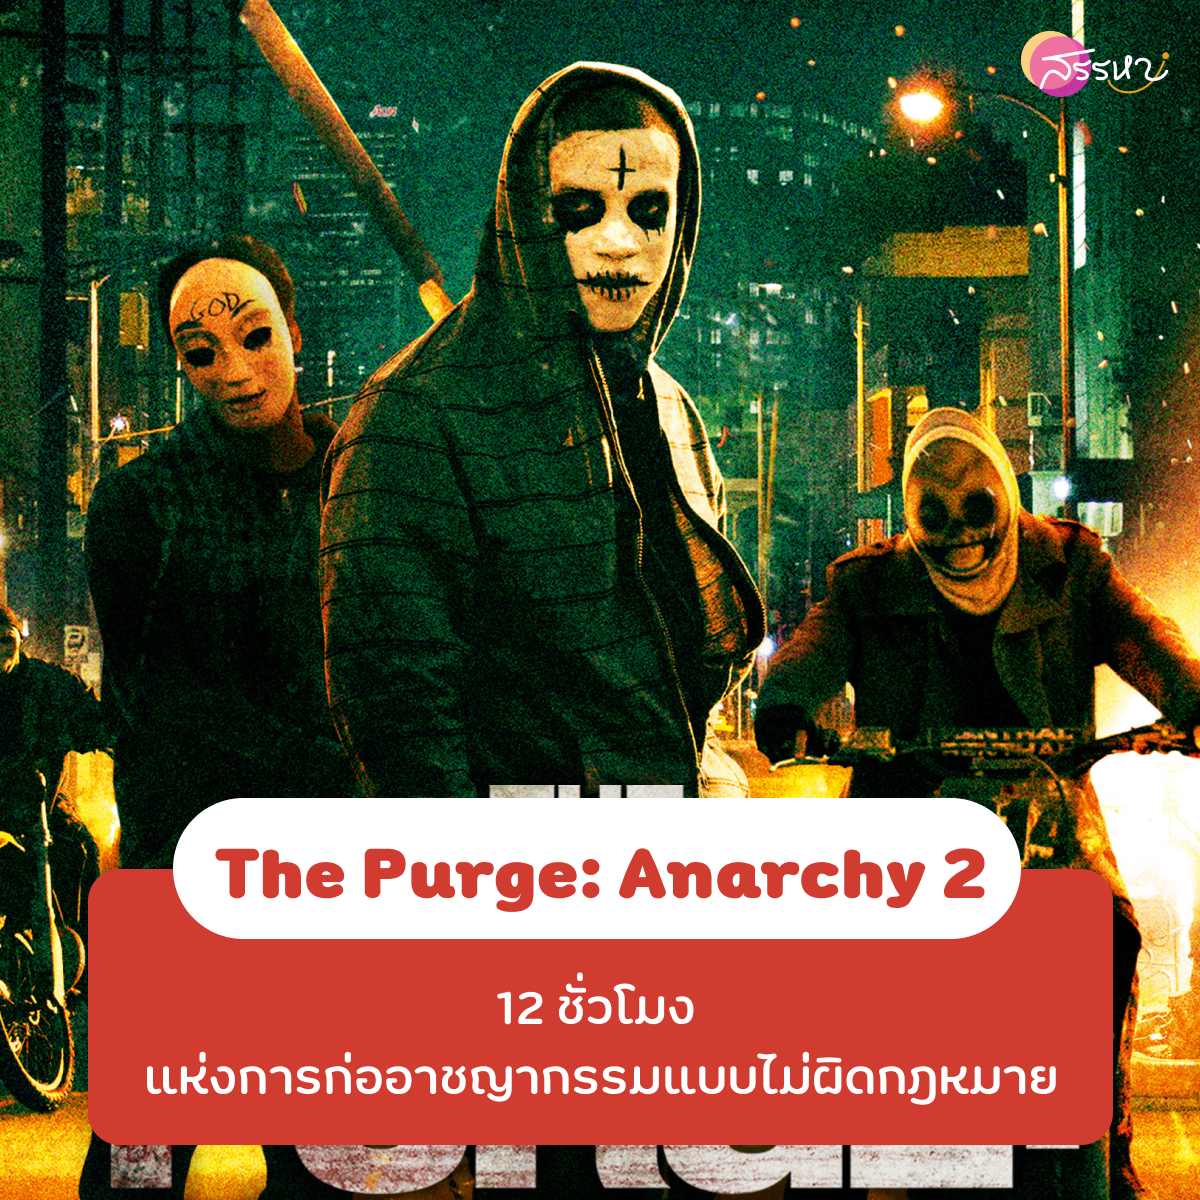 The Purge: Anarchy 2